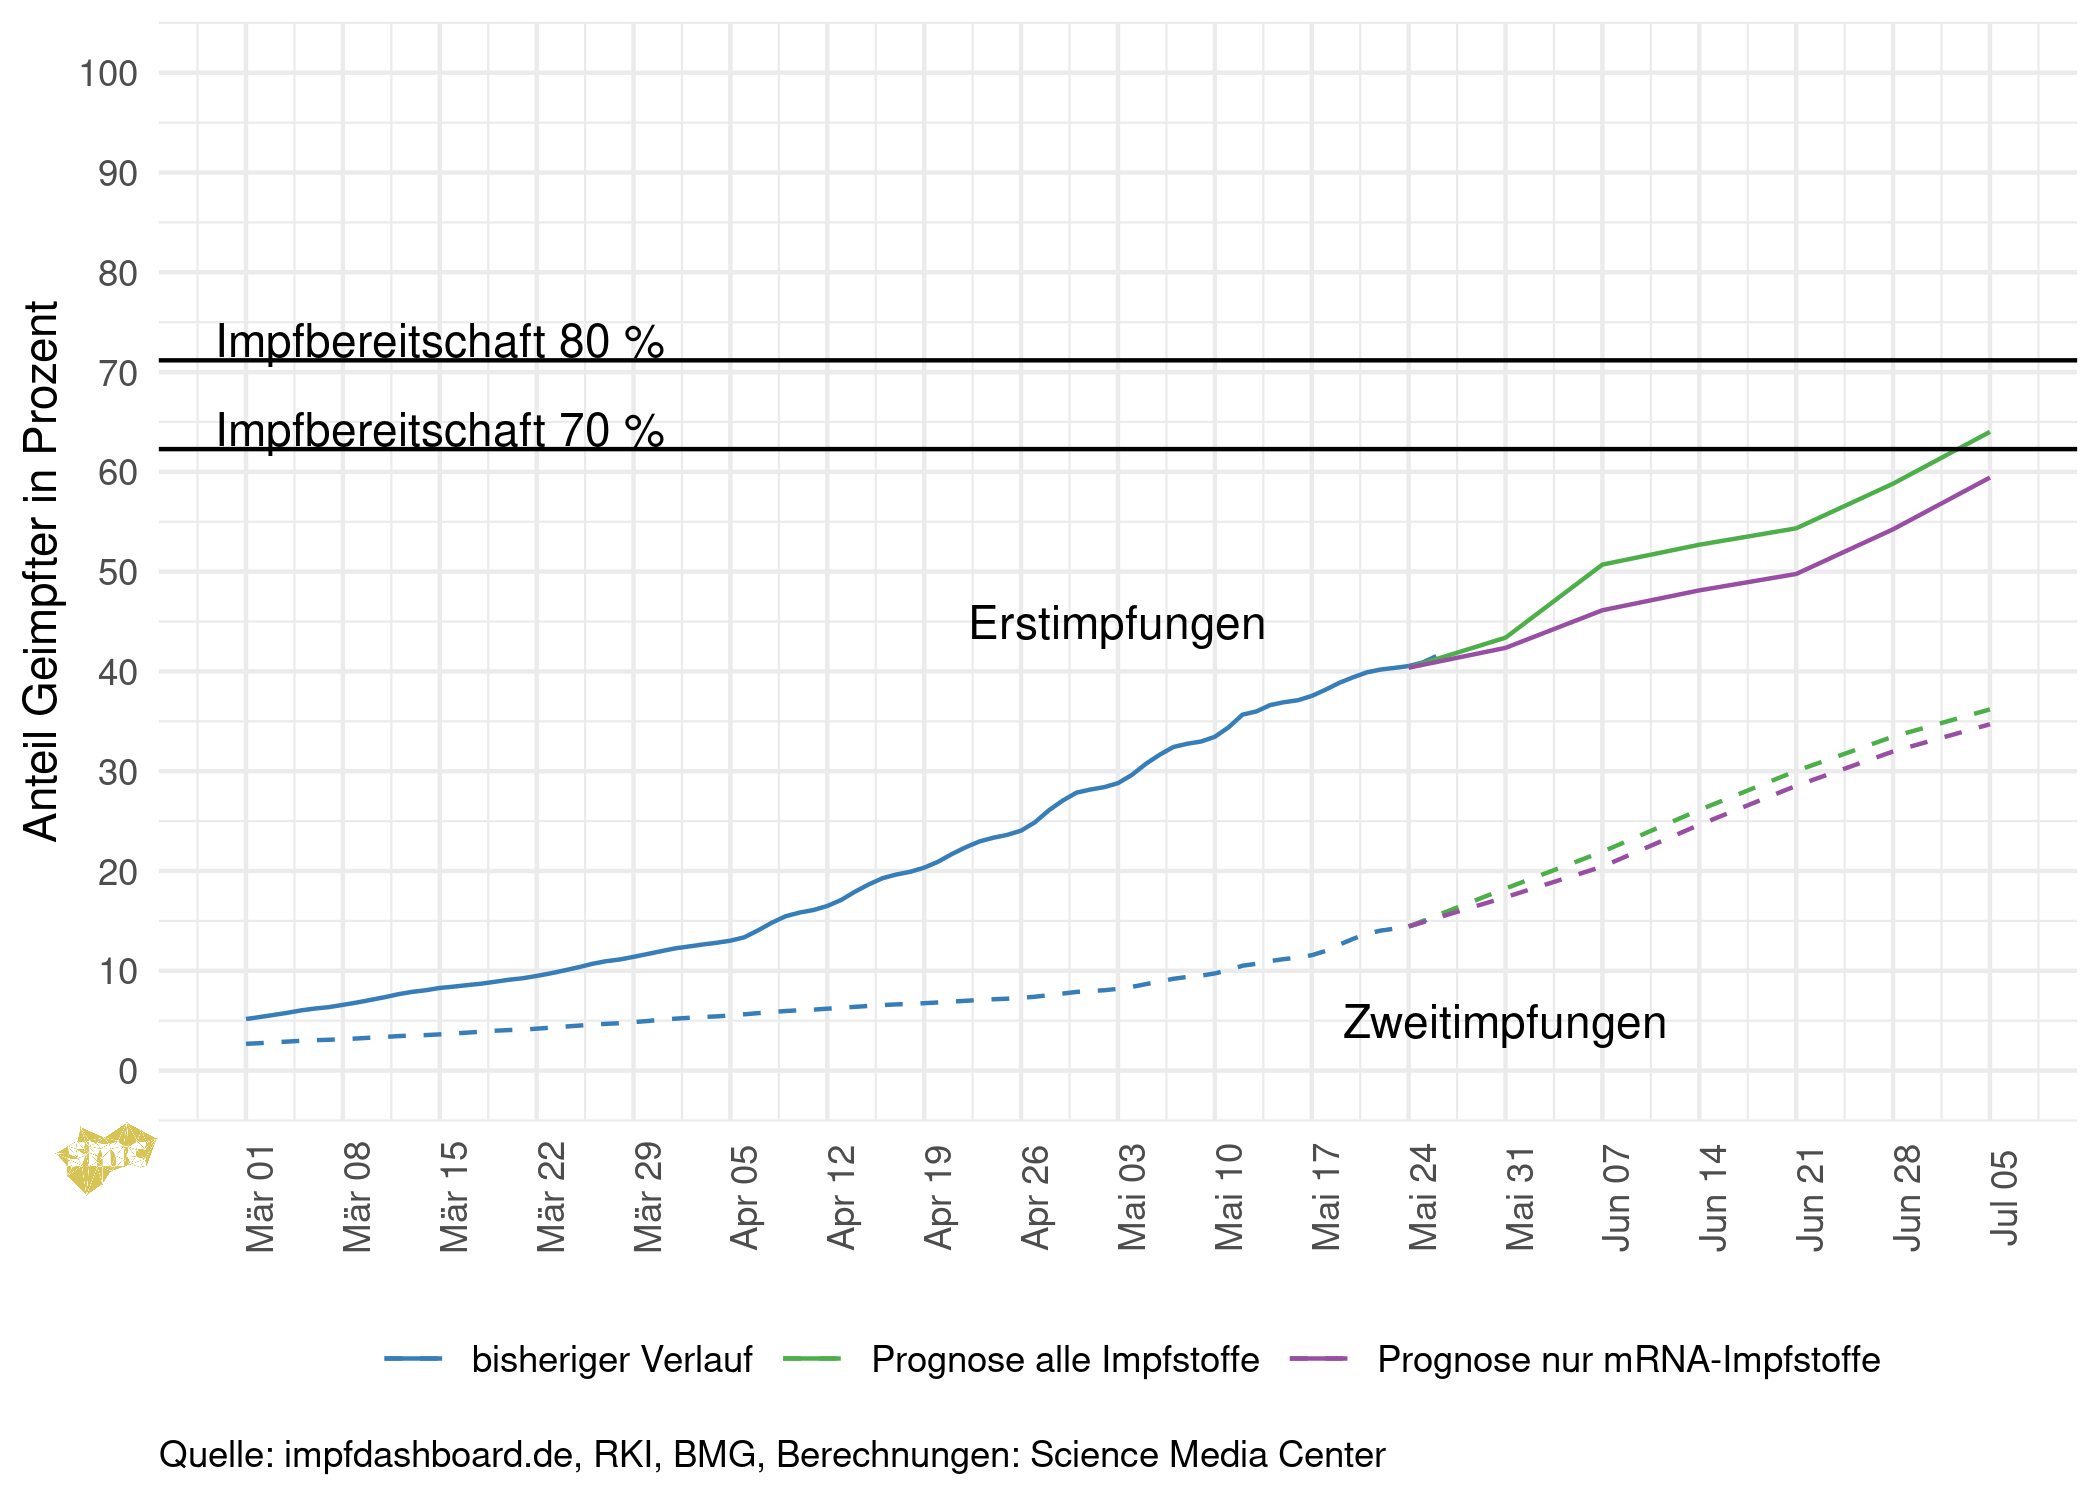 2021-05-27_Impfungen_Prognosen.png